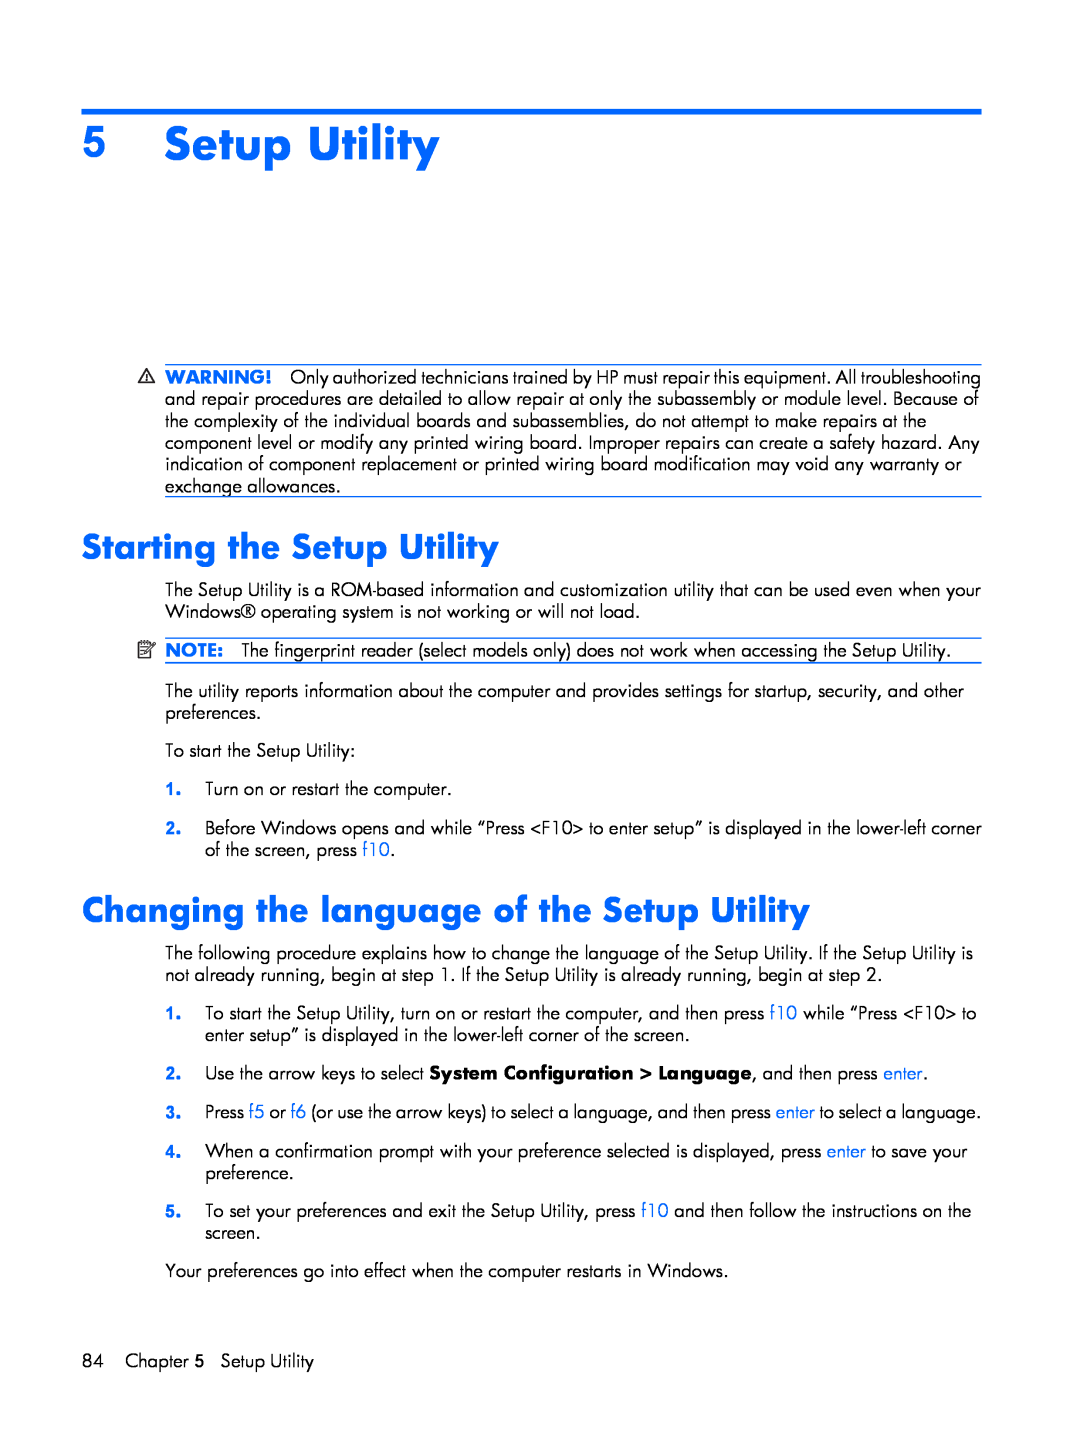 HP C710TU, C721TU, C725BR, C718TU, C720BR, C717TU Starting the Setup Utility, Changing the language of the Setup Utility 